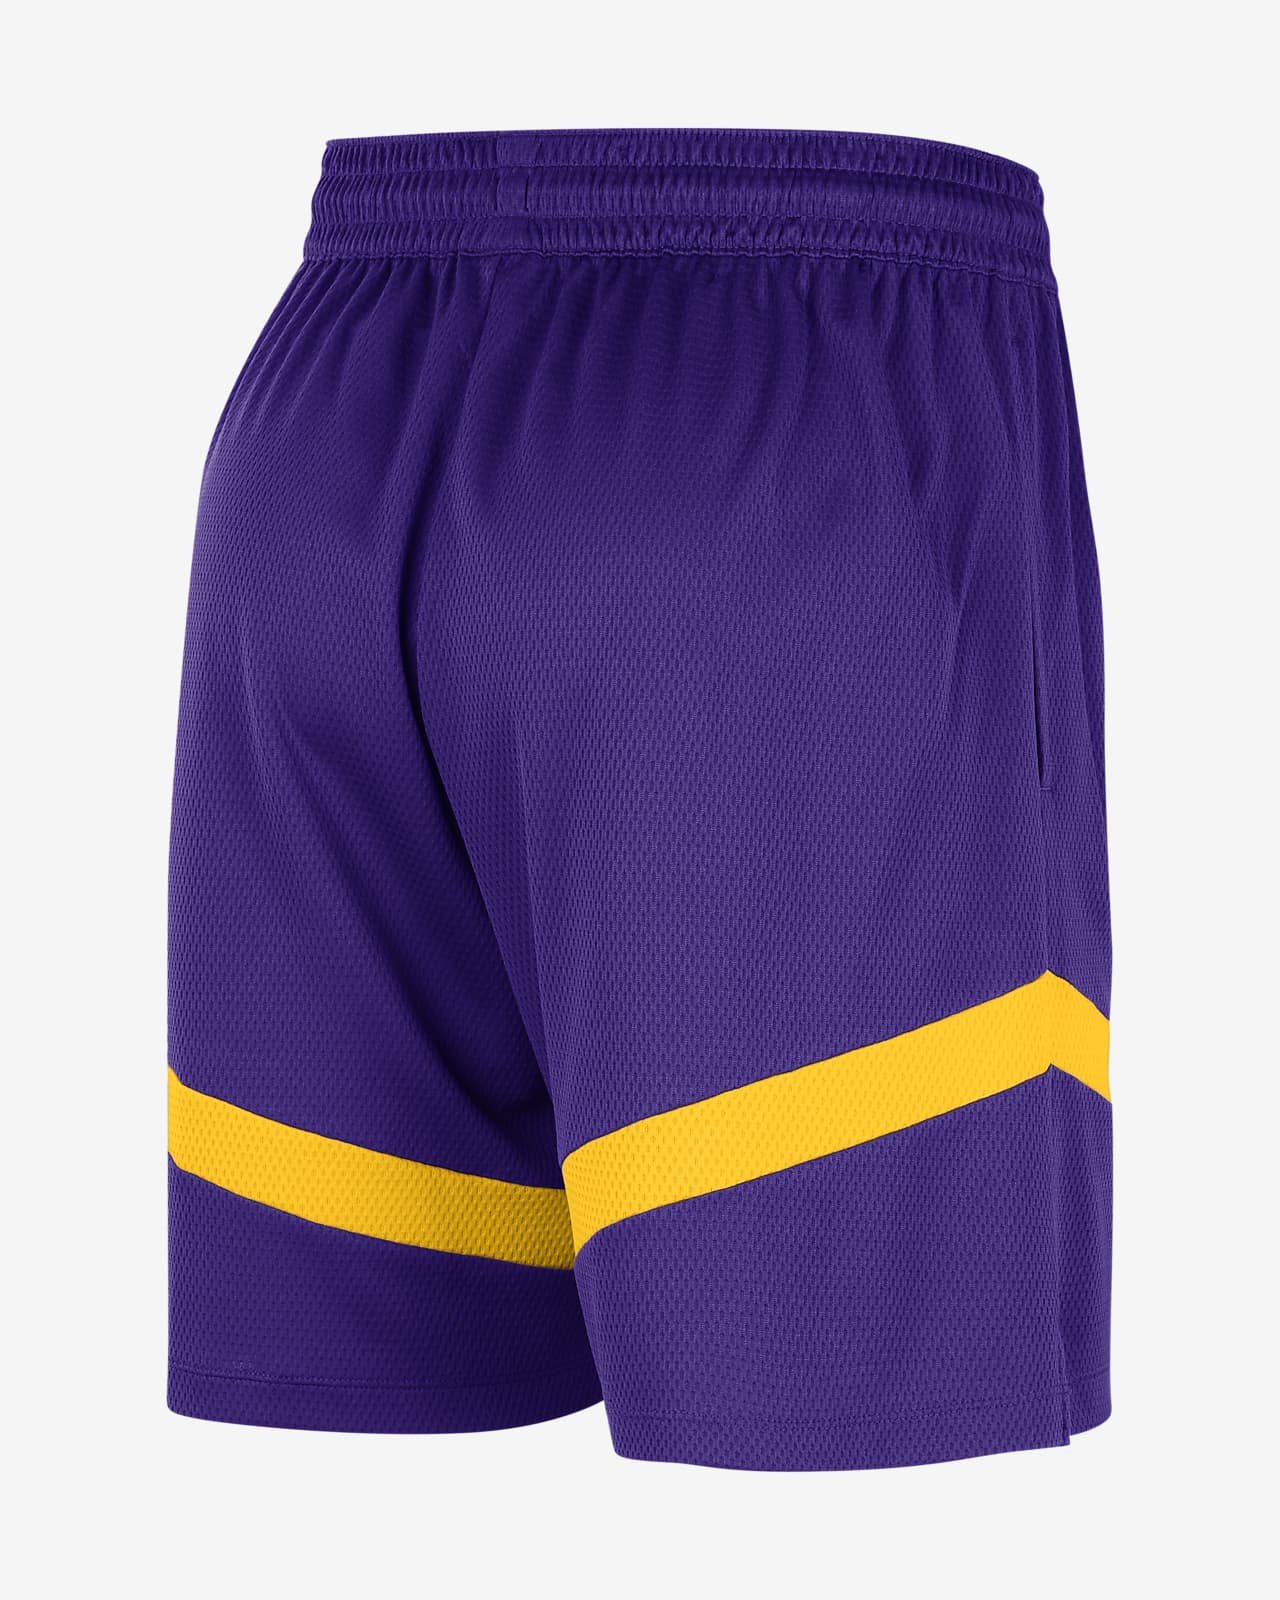 Lakers Triple Star New Design NBA Basketball Jersey Shorts For Men